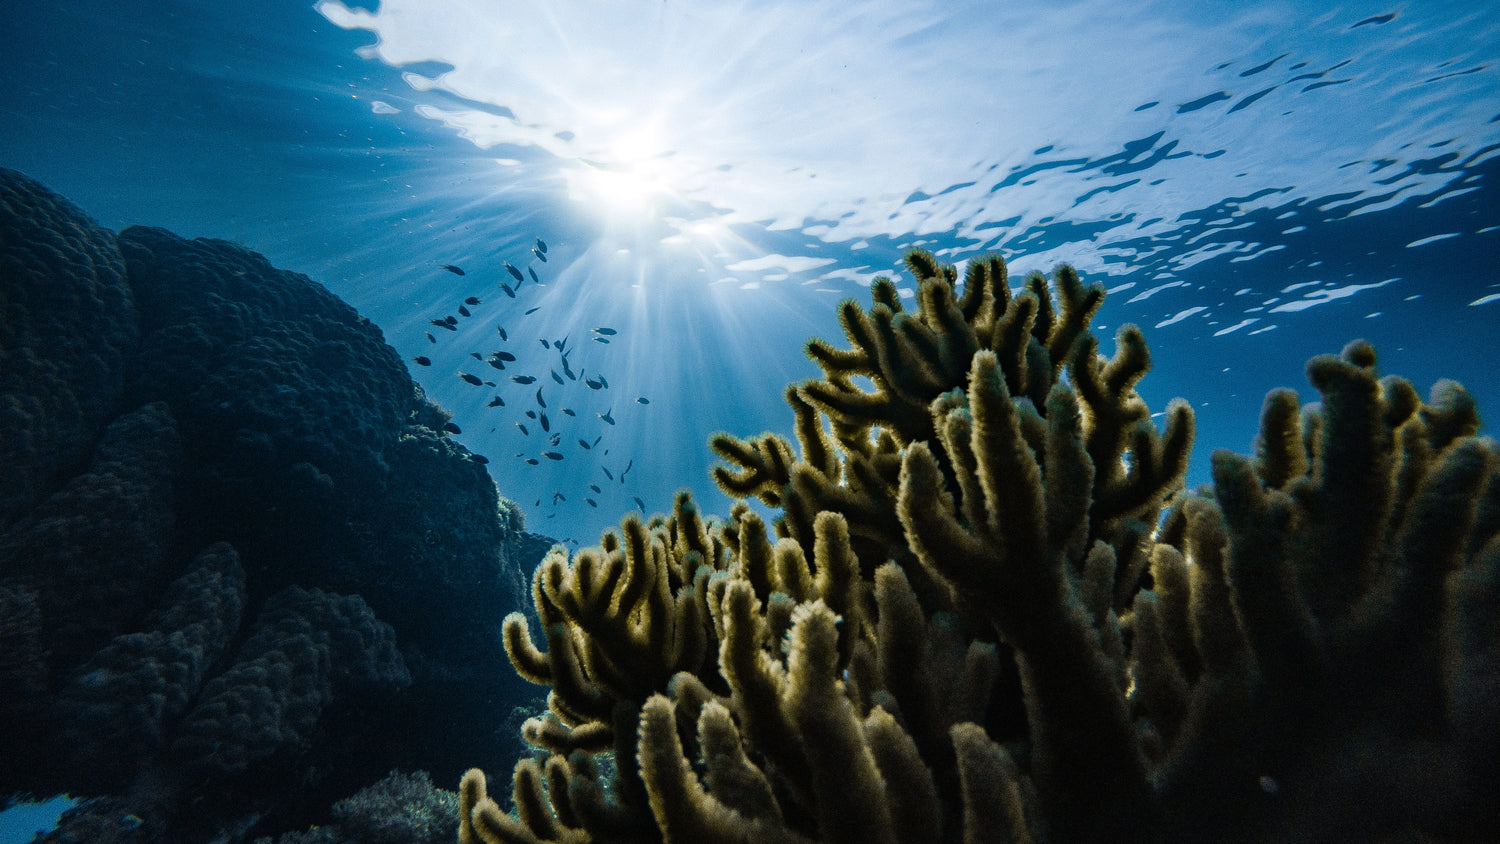 OSHEN. Underwater ocean photo. Photographer: Marek Okon.